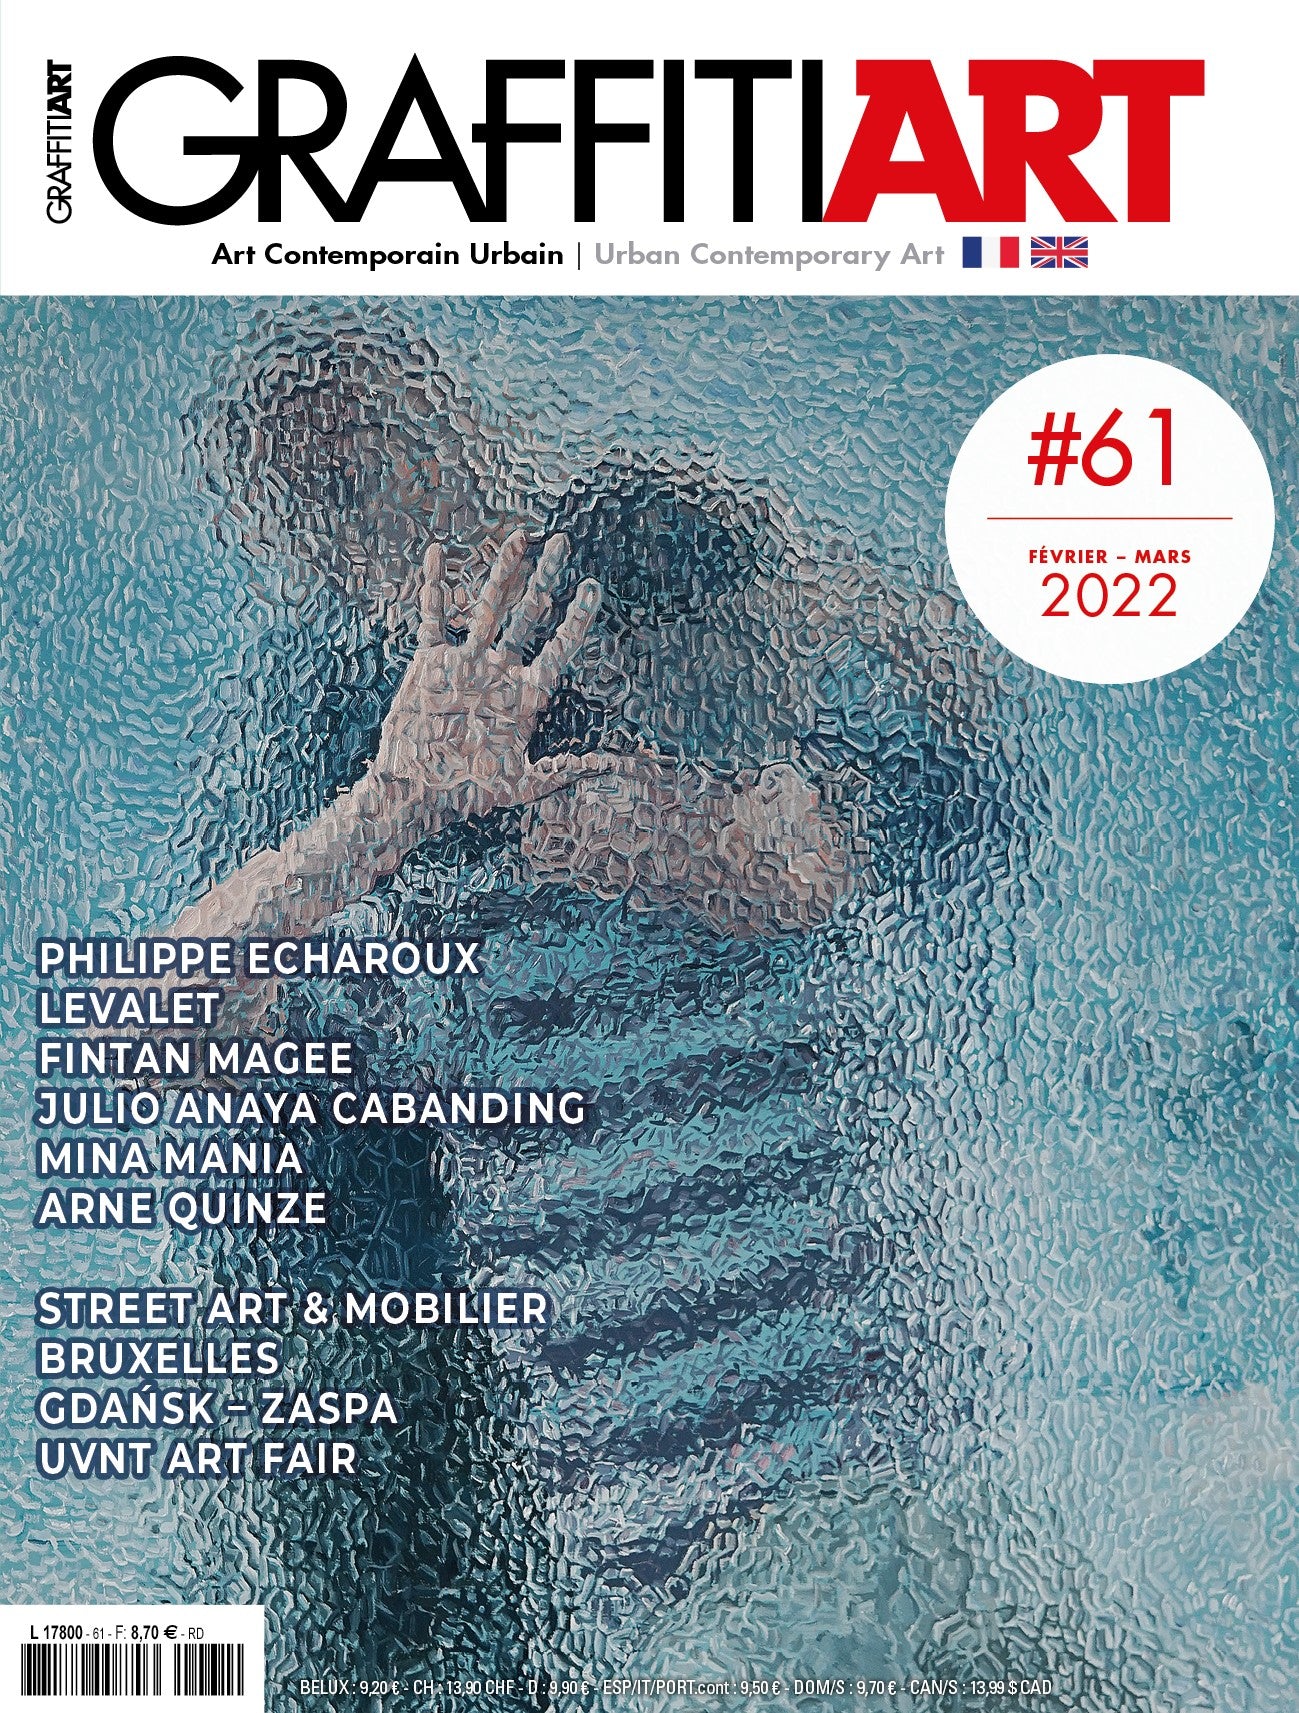 Graffiti Art Magazine #61 | Février - Mars 2022